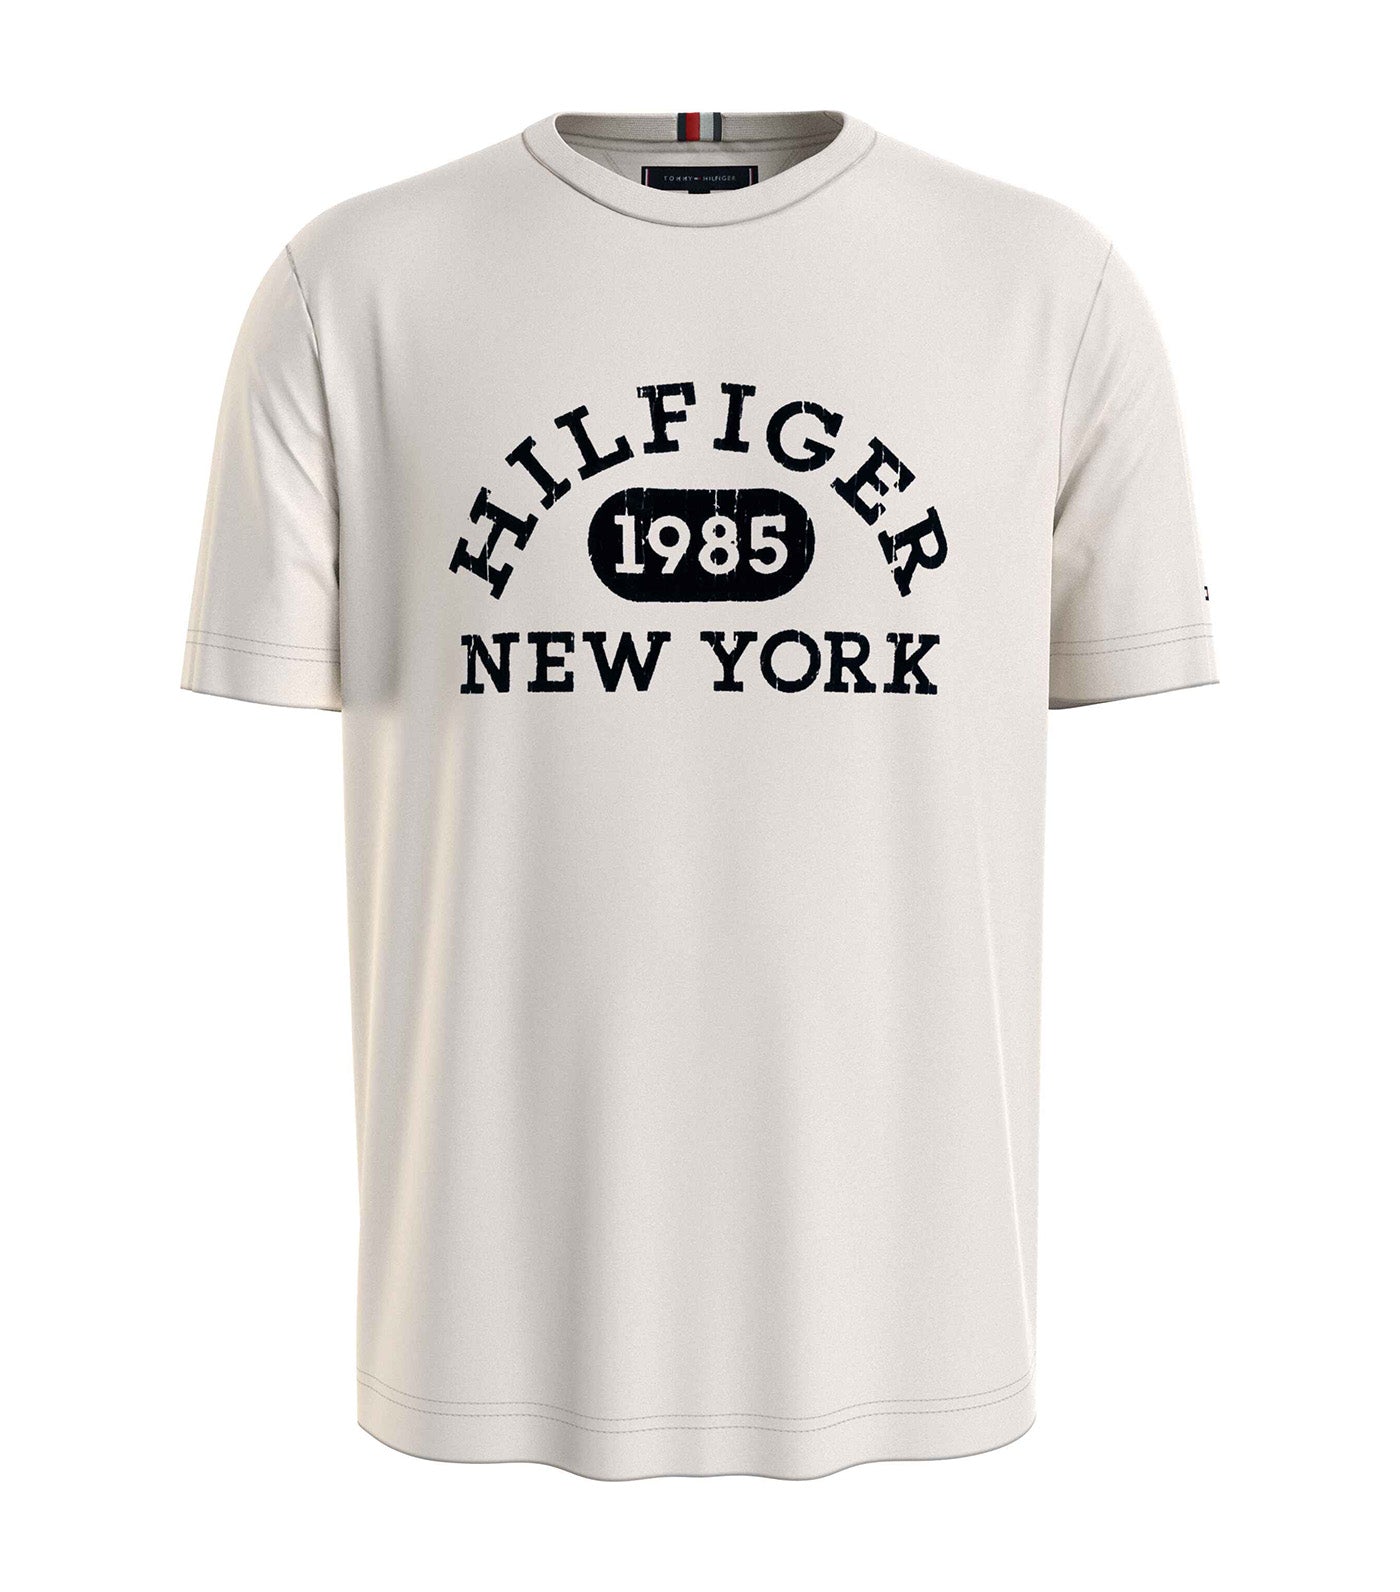 Slim Fit Flag Monotype T-Shirt